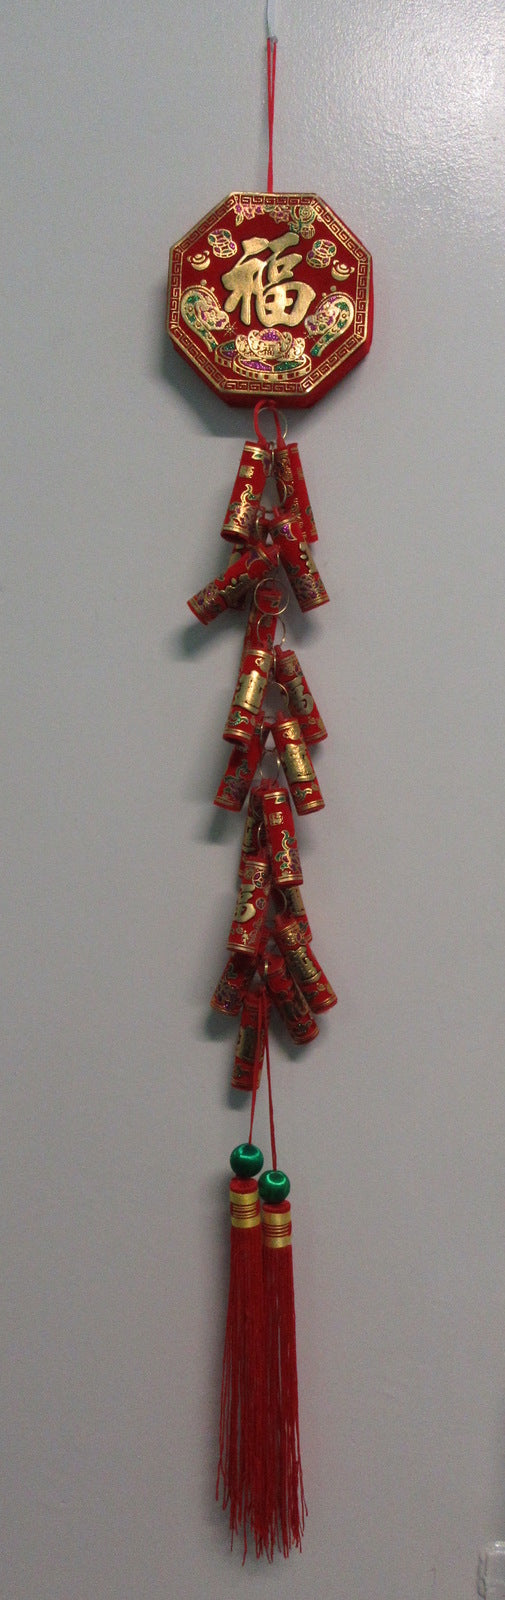 Chinese New Year Decorative Firecraker Garland